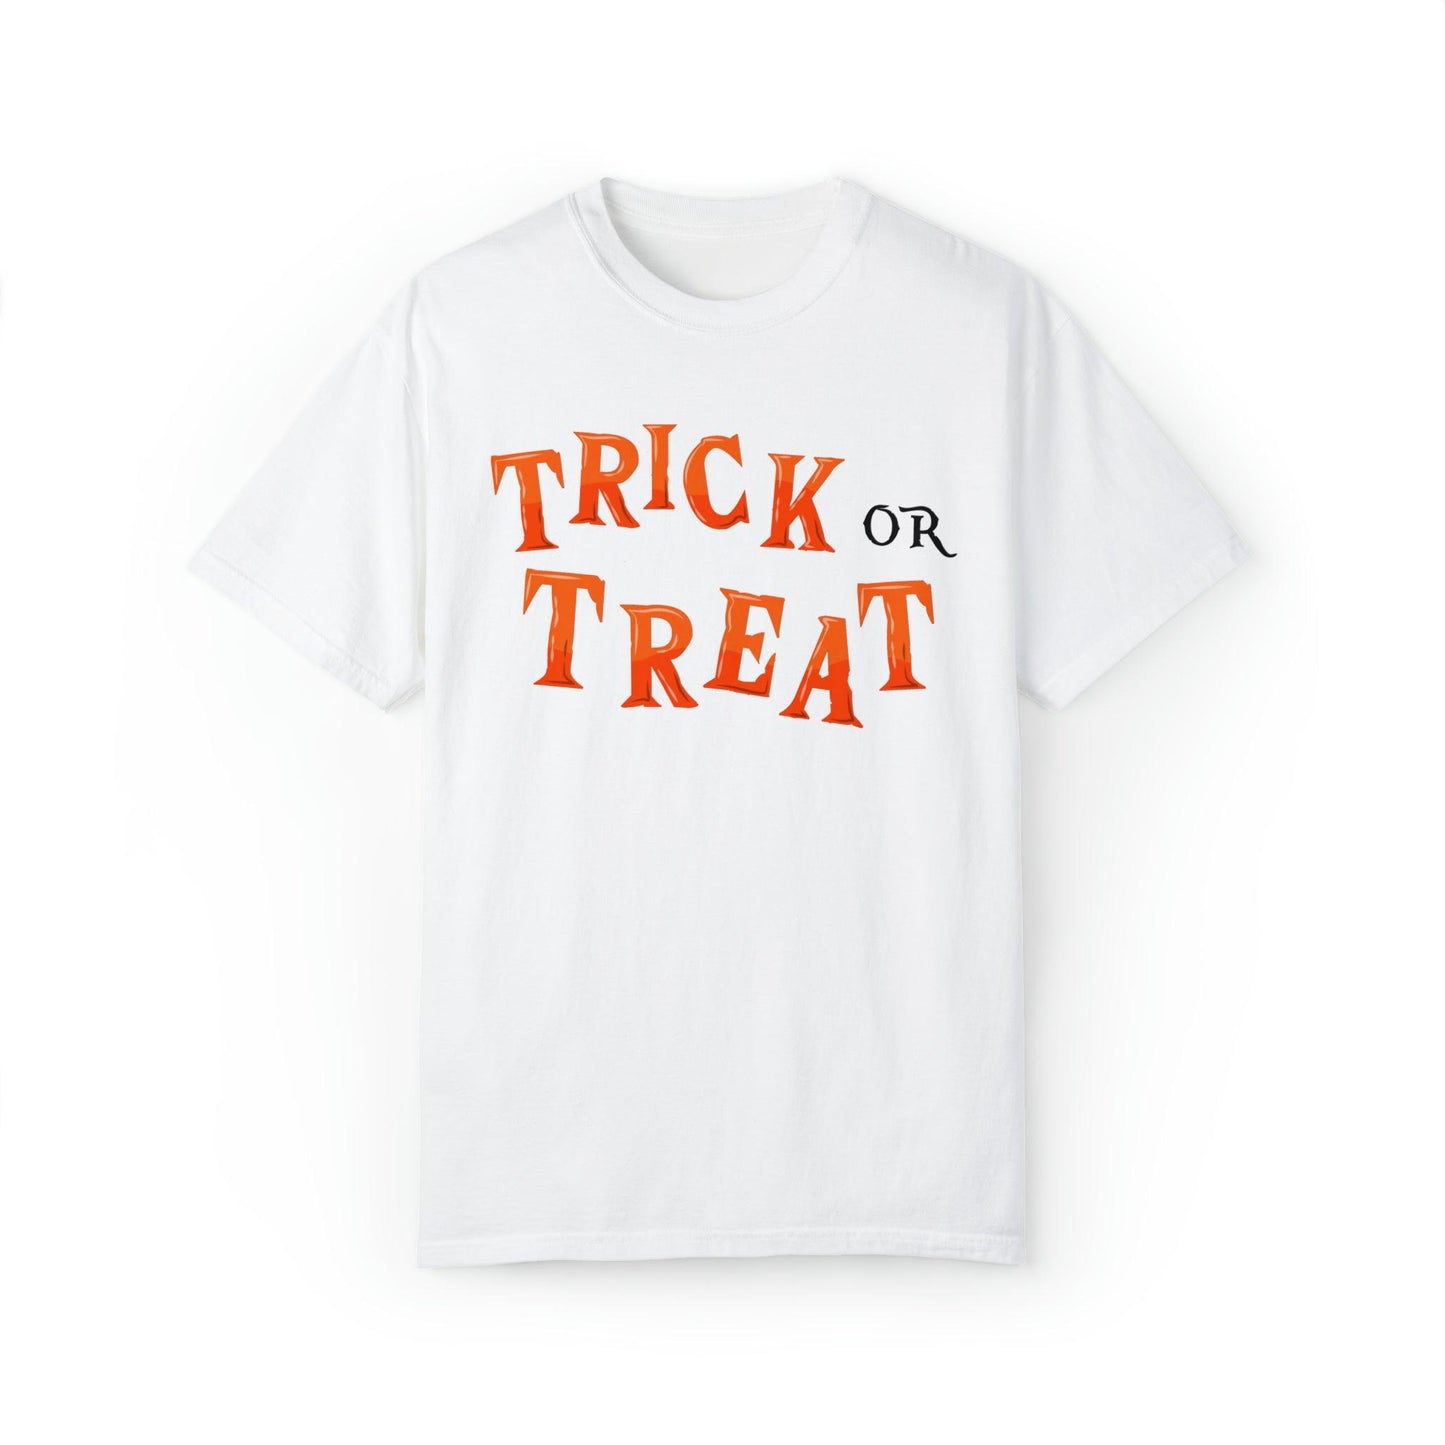 Vintage Shirt Halloween Shirt Retro Halloween Tshirt, Trick or Treat Shirt Cute Spooky Shirt, Halloween Gift Halloween T-shirt